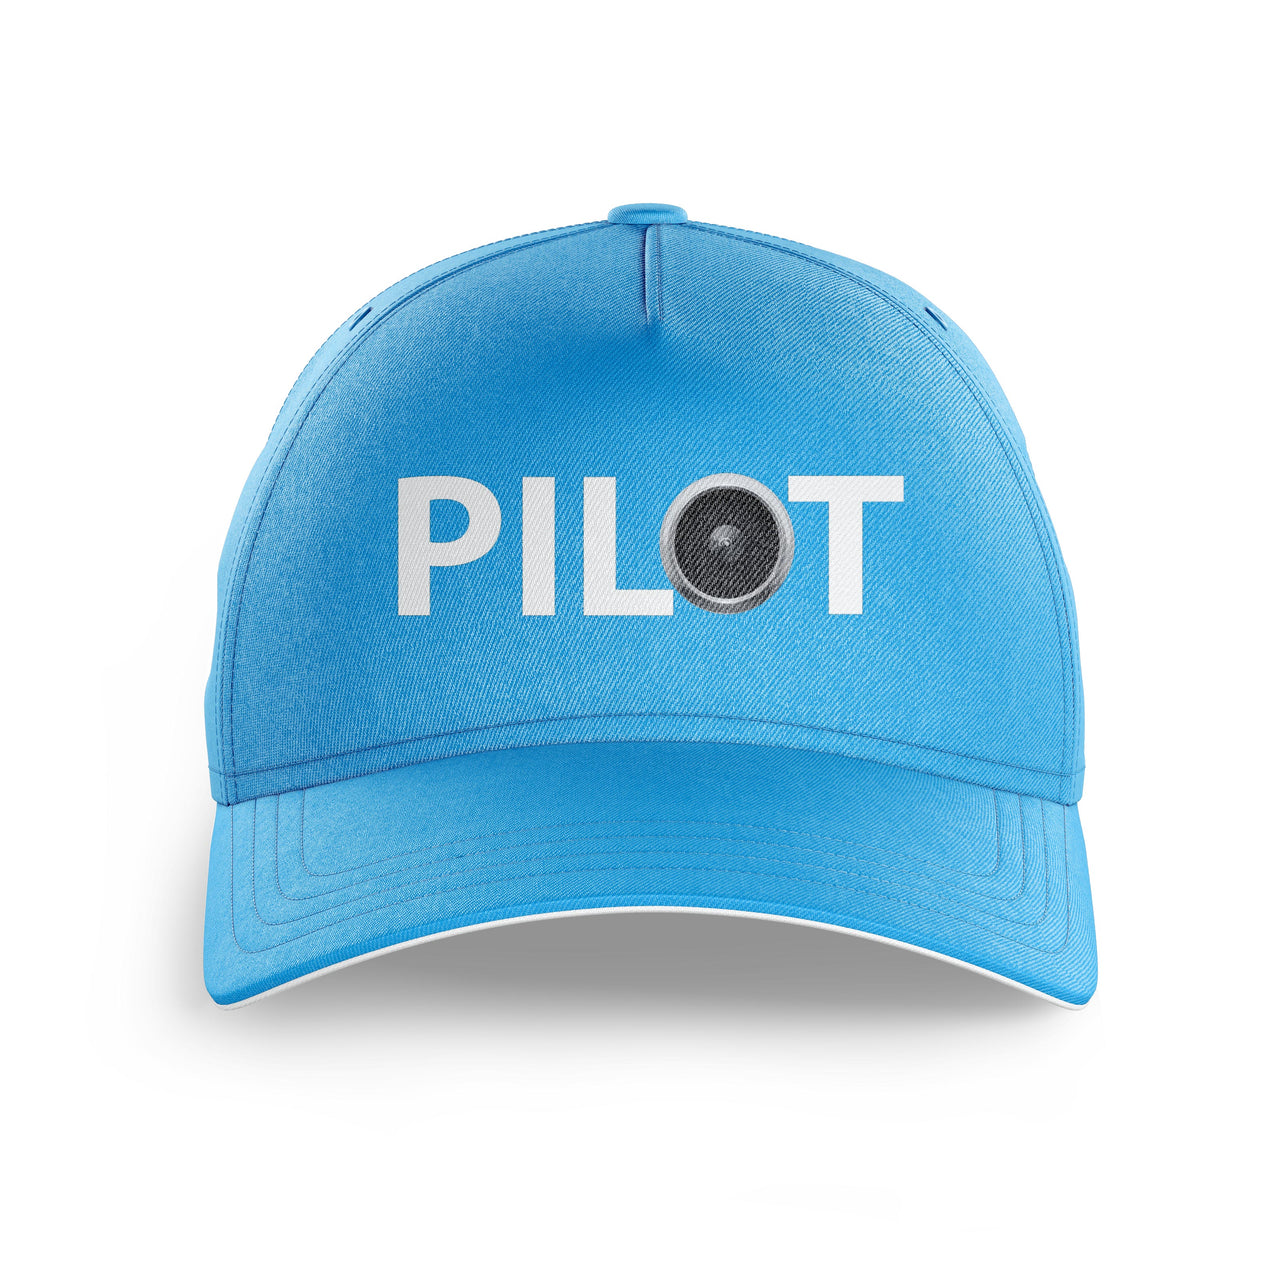 Pilot & Jet Engine Printed Hats